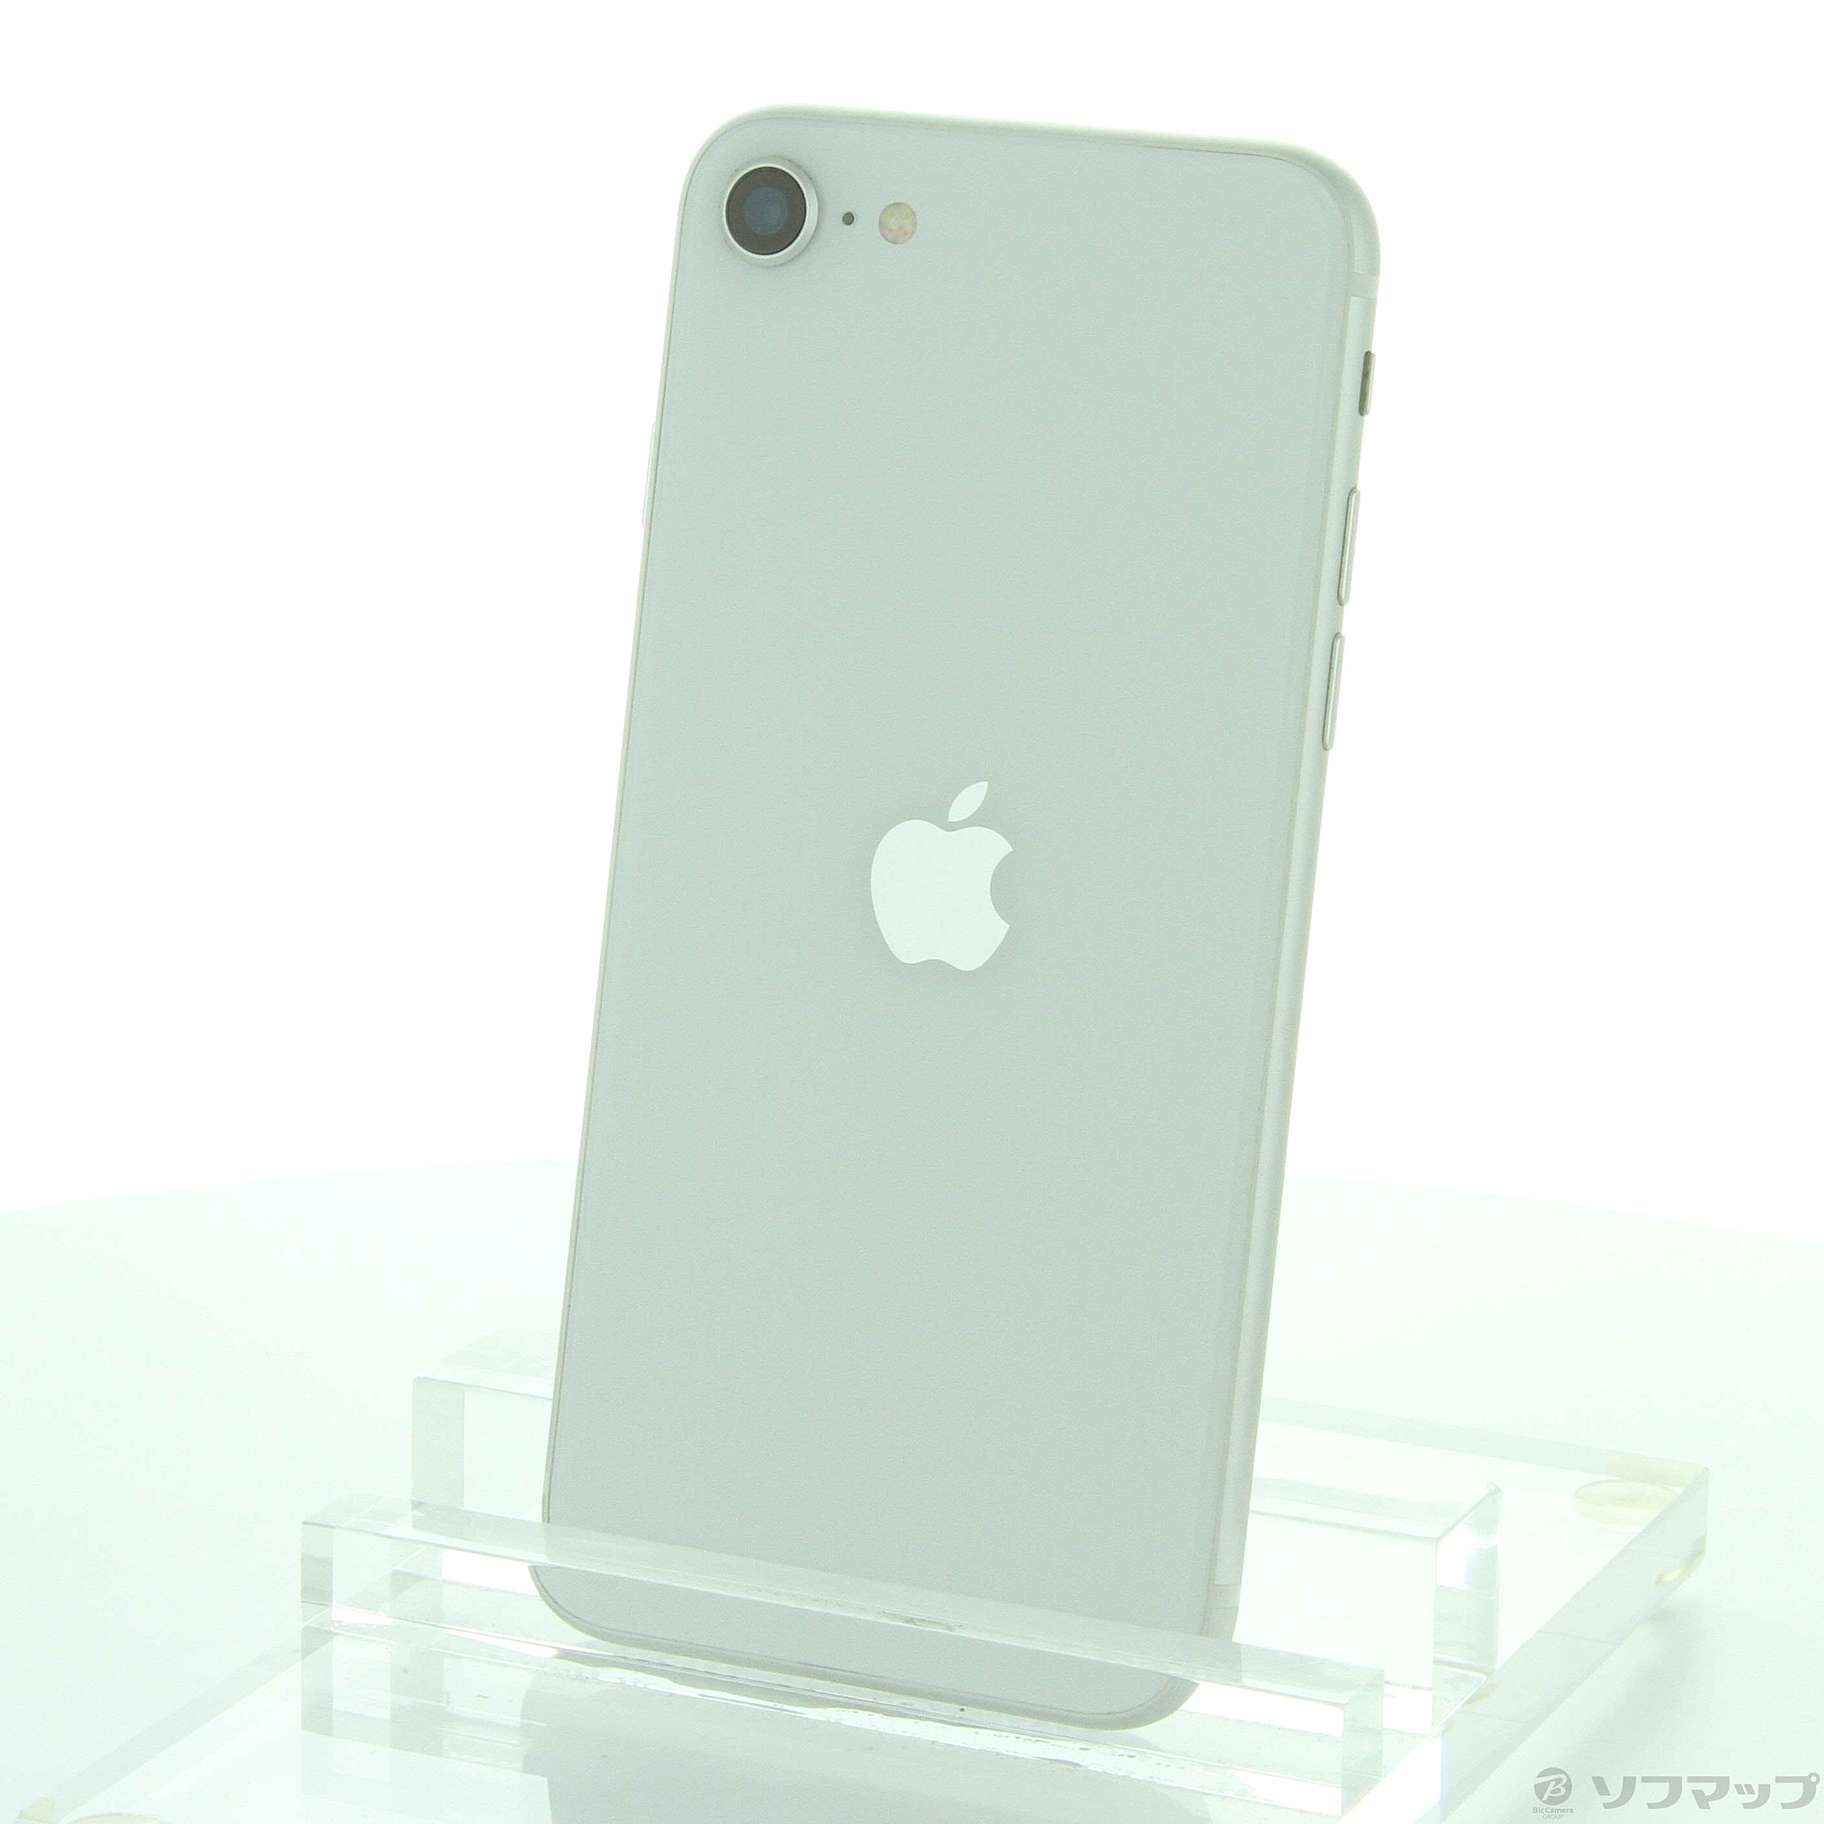 Apple iPhoneSE 第2世代 128GB ホワイトiPhoneSE2